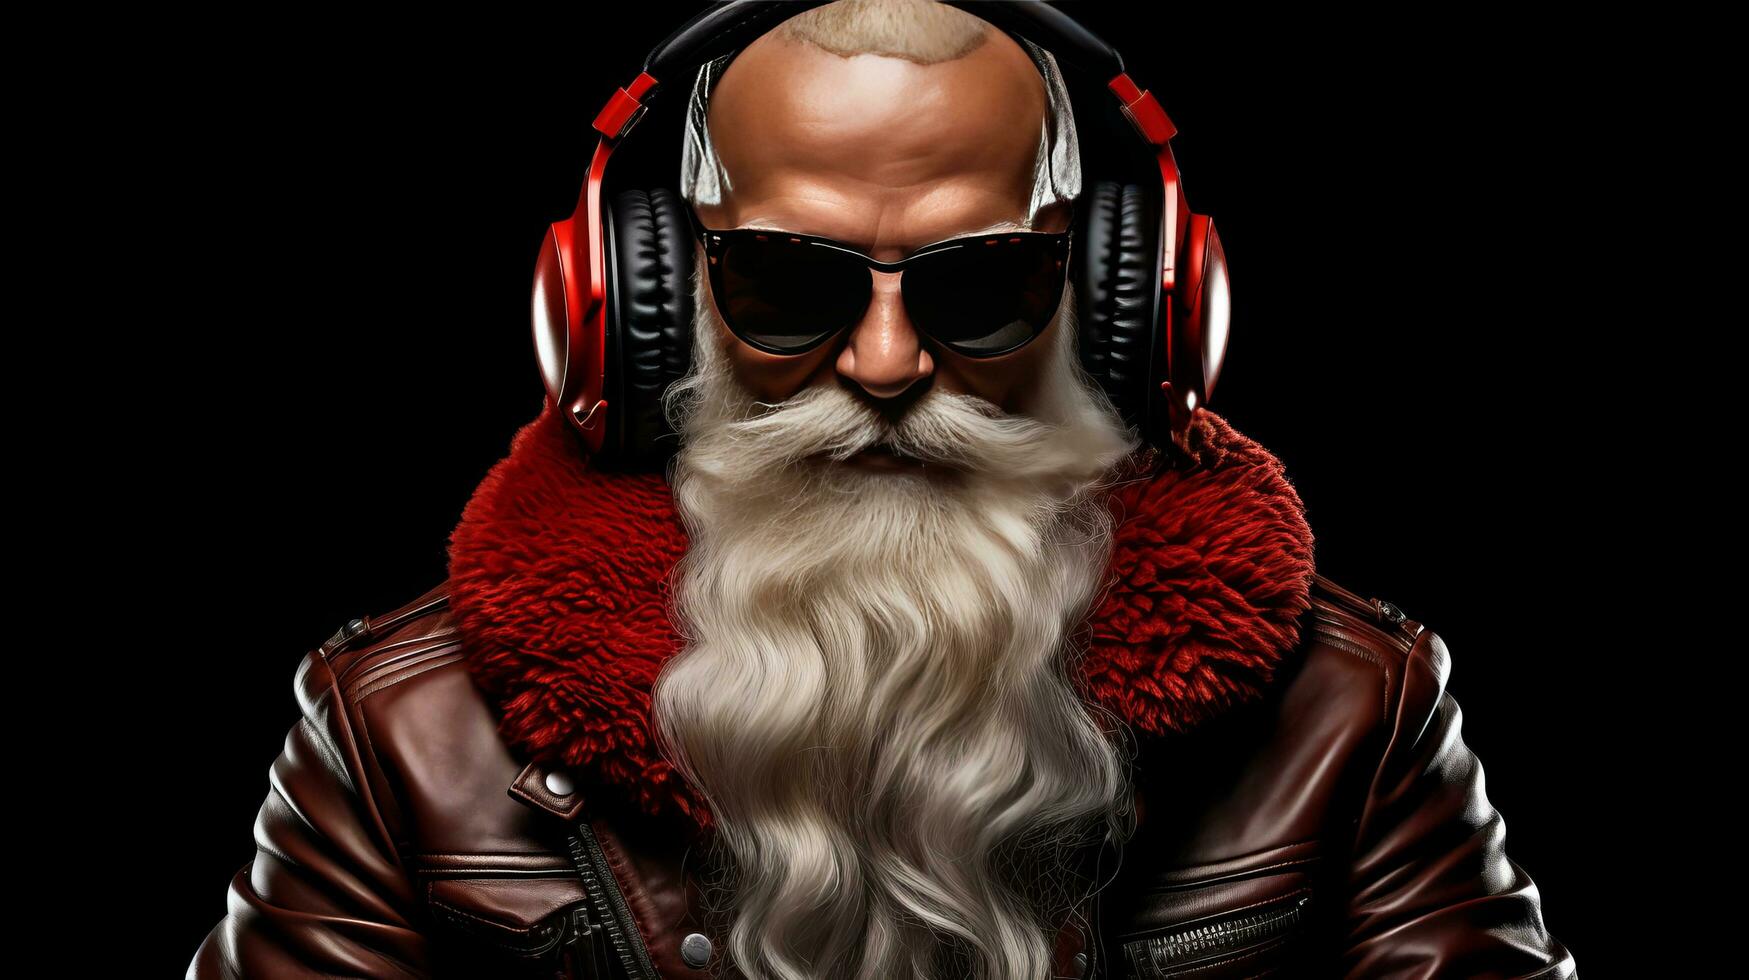 Cool Santa Claus DJ photo